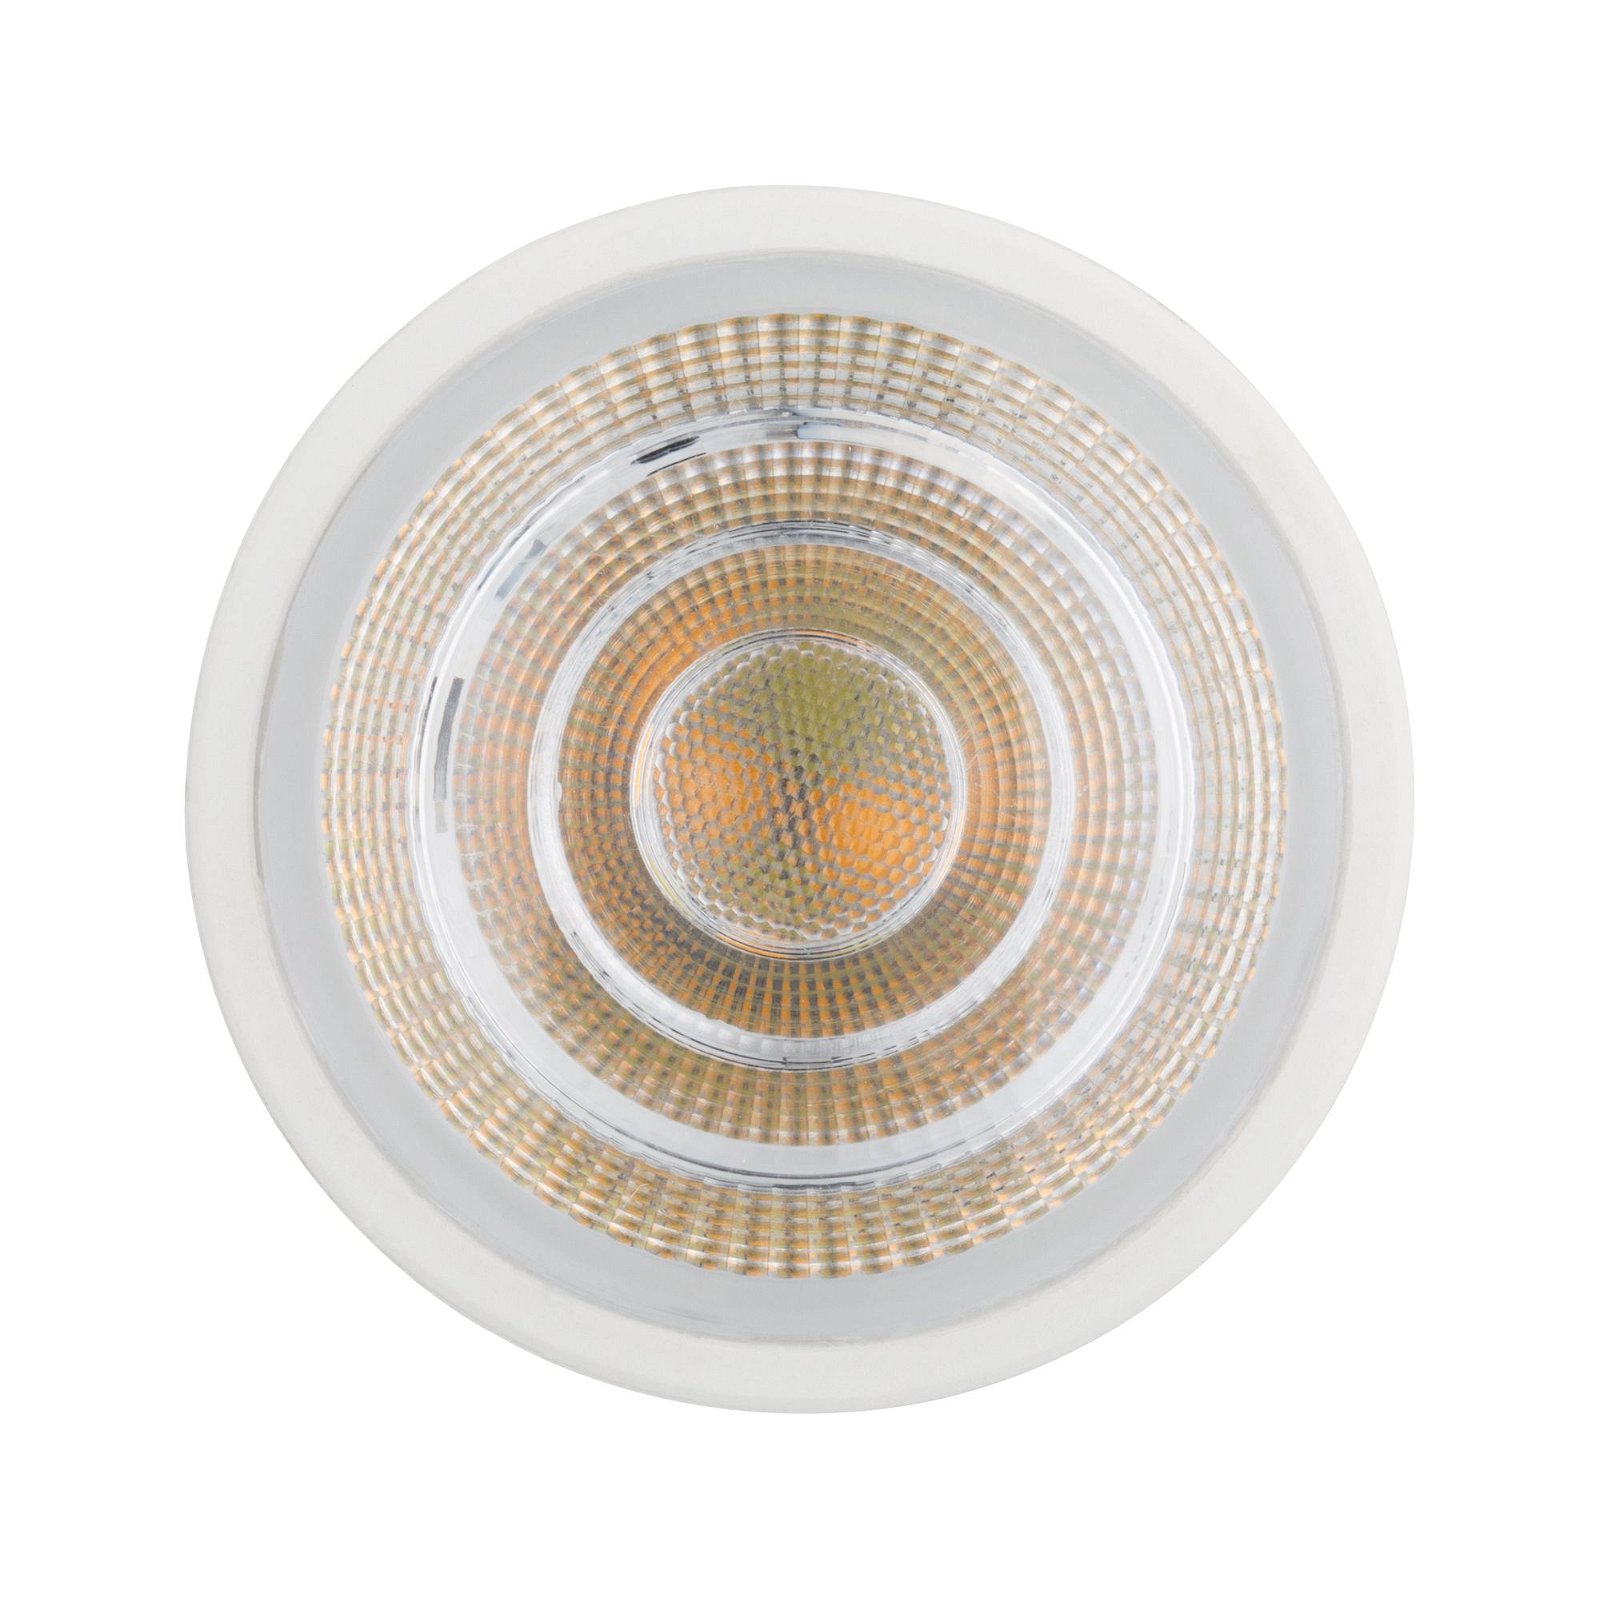 LED Reflector Smart Home Zigbee GU10 230V 330lm 5W Tunable White dimmable Matt